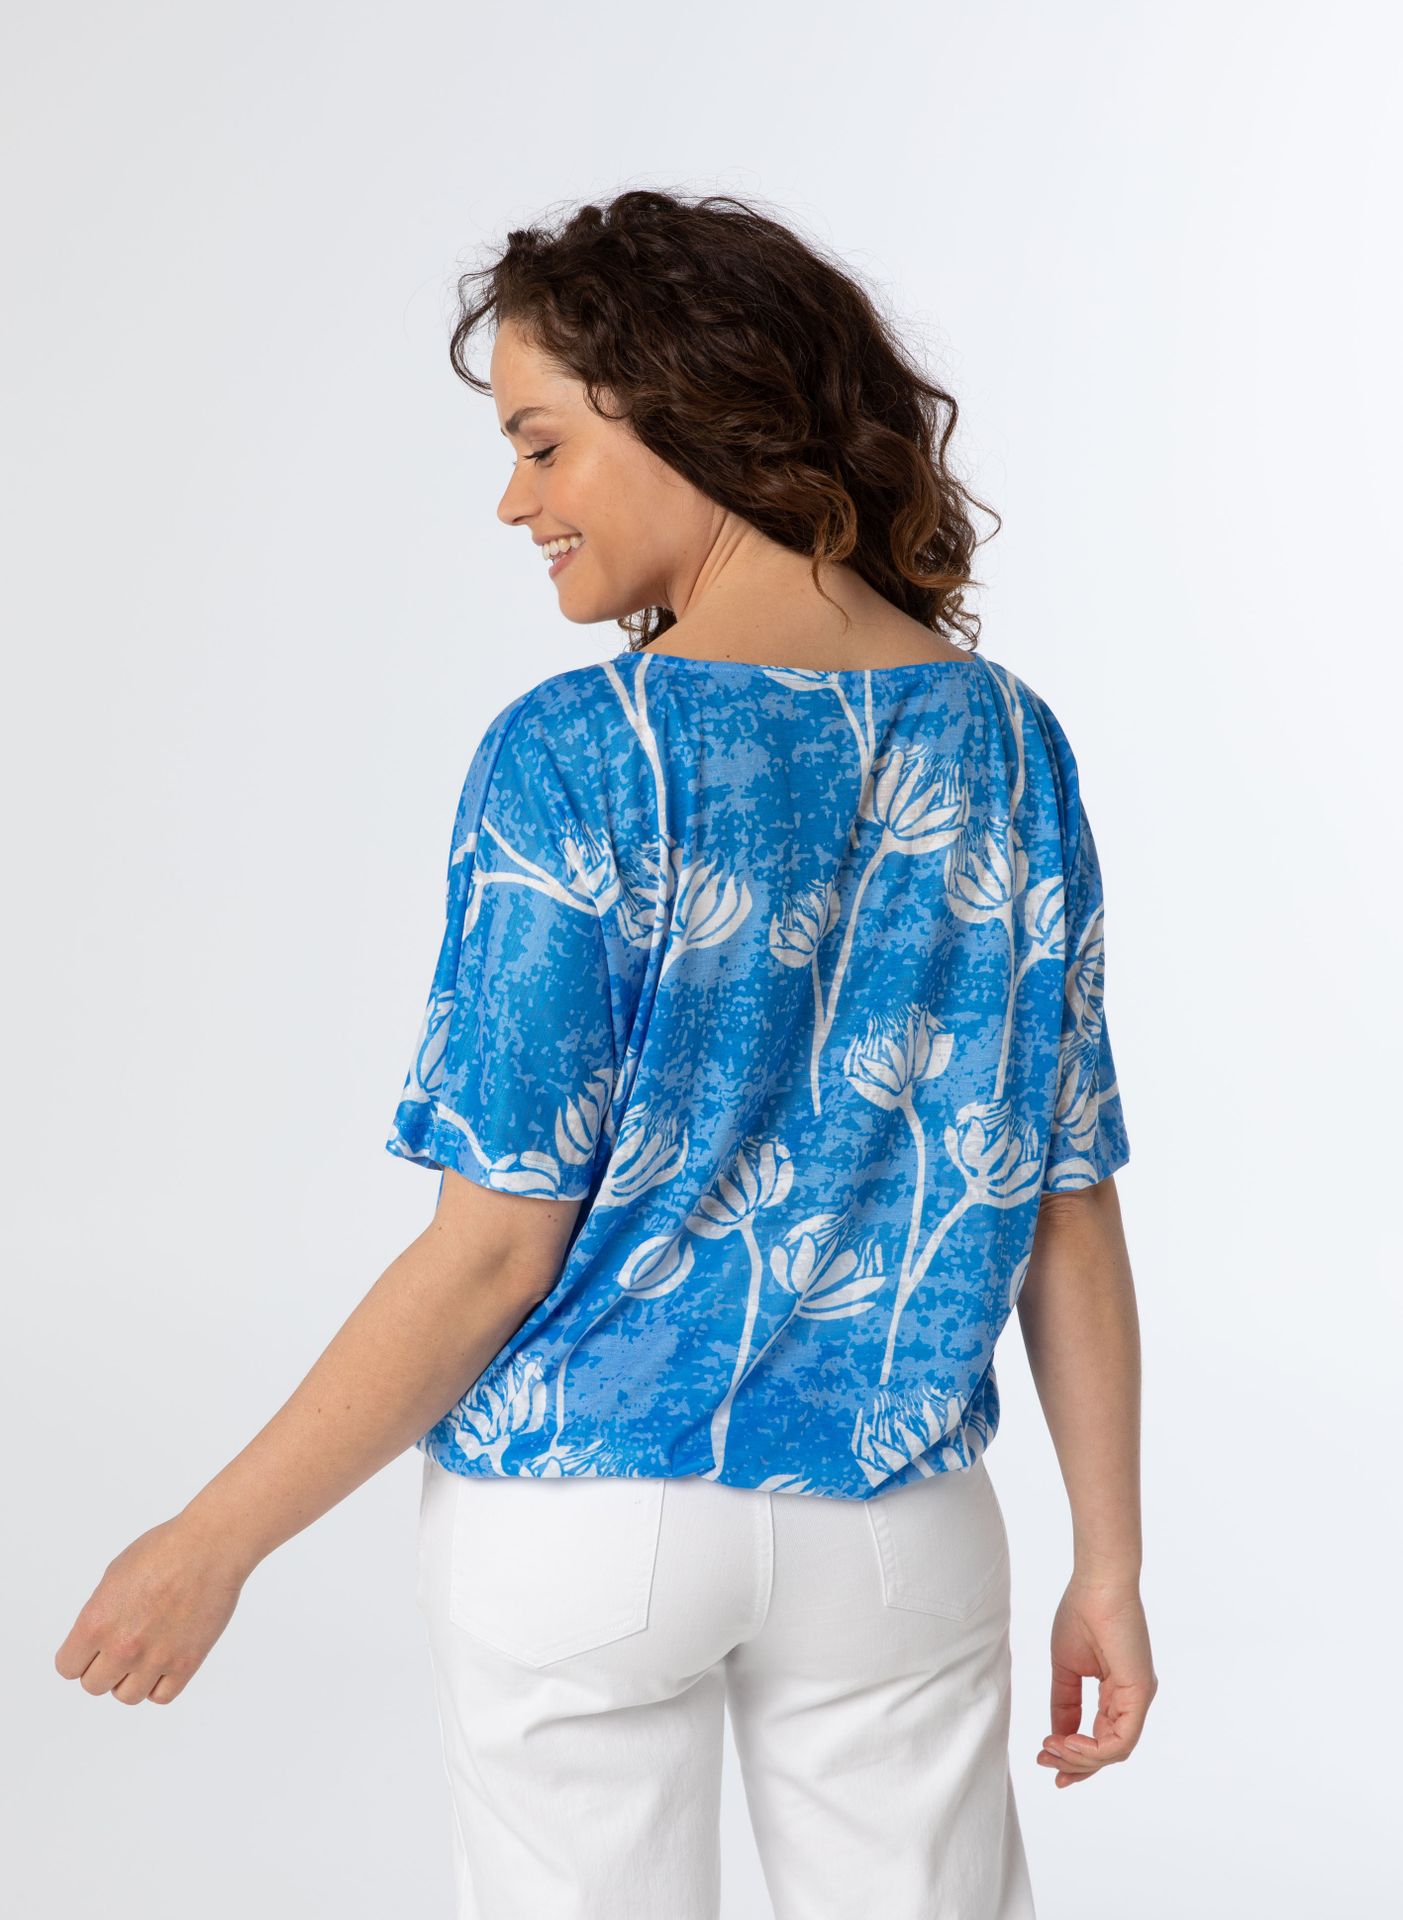 Norah Shirt blauw wit  blue/white 213096-431